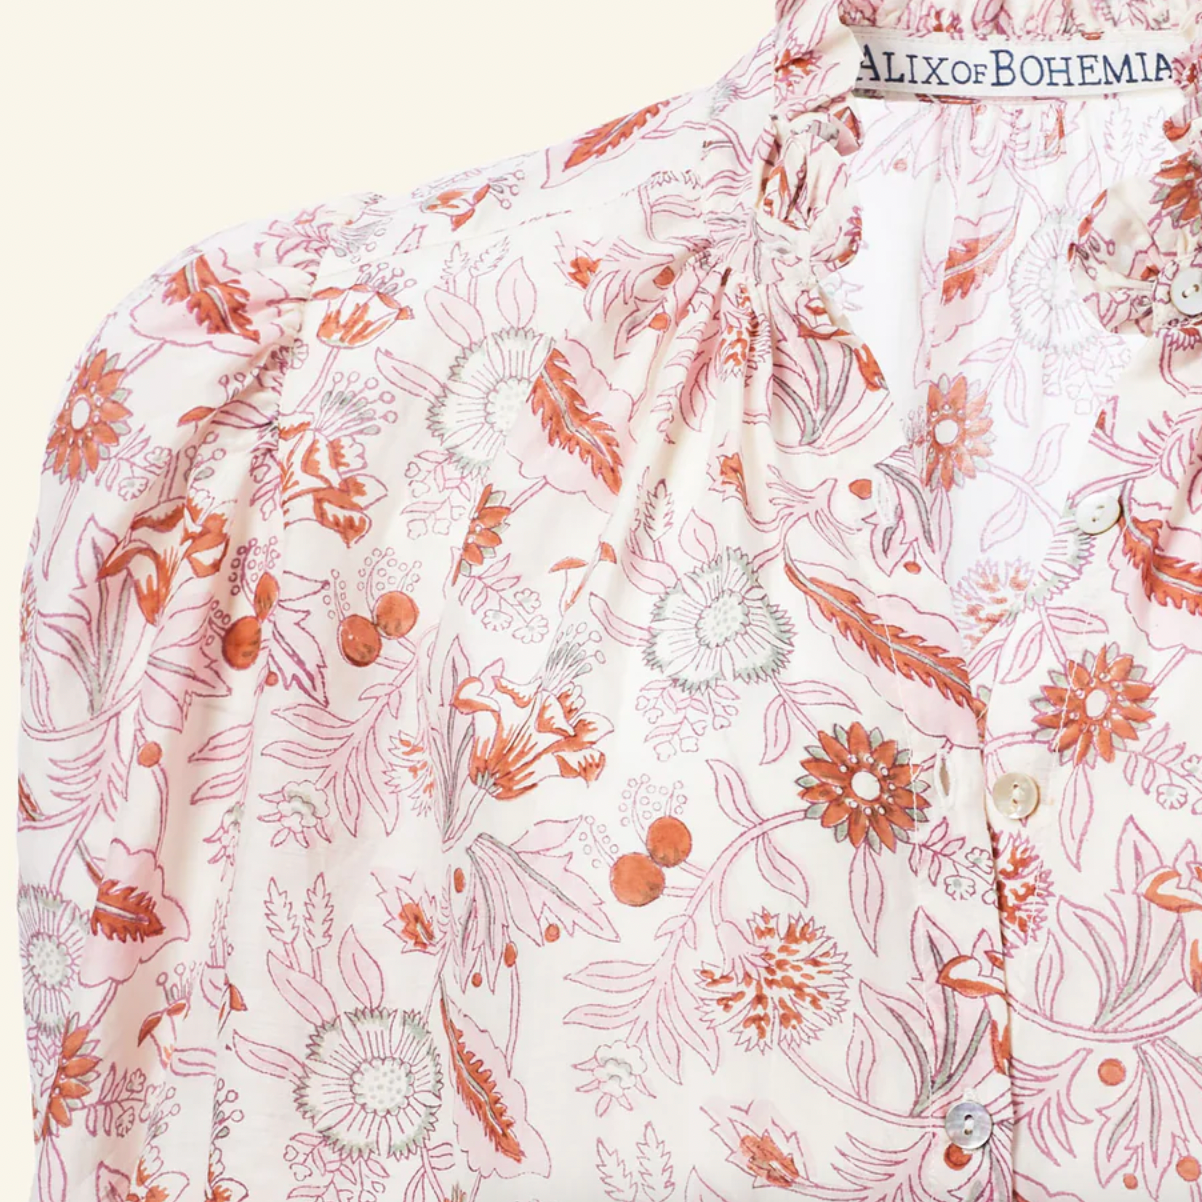 Annabel Camellia Shirt